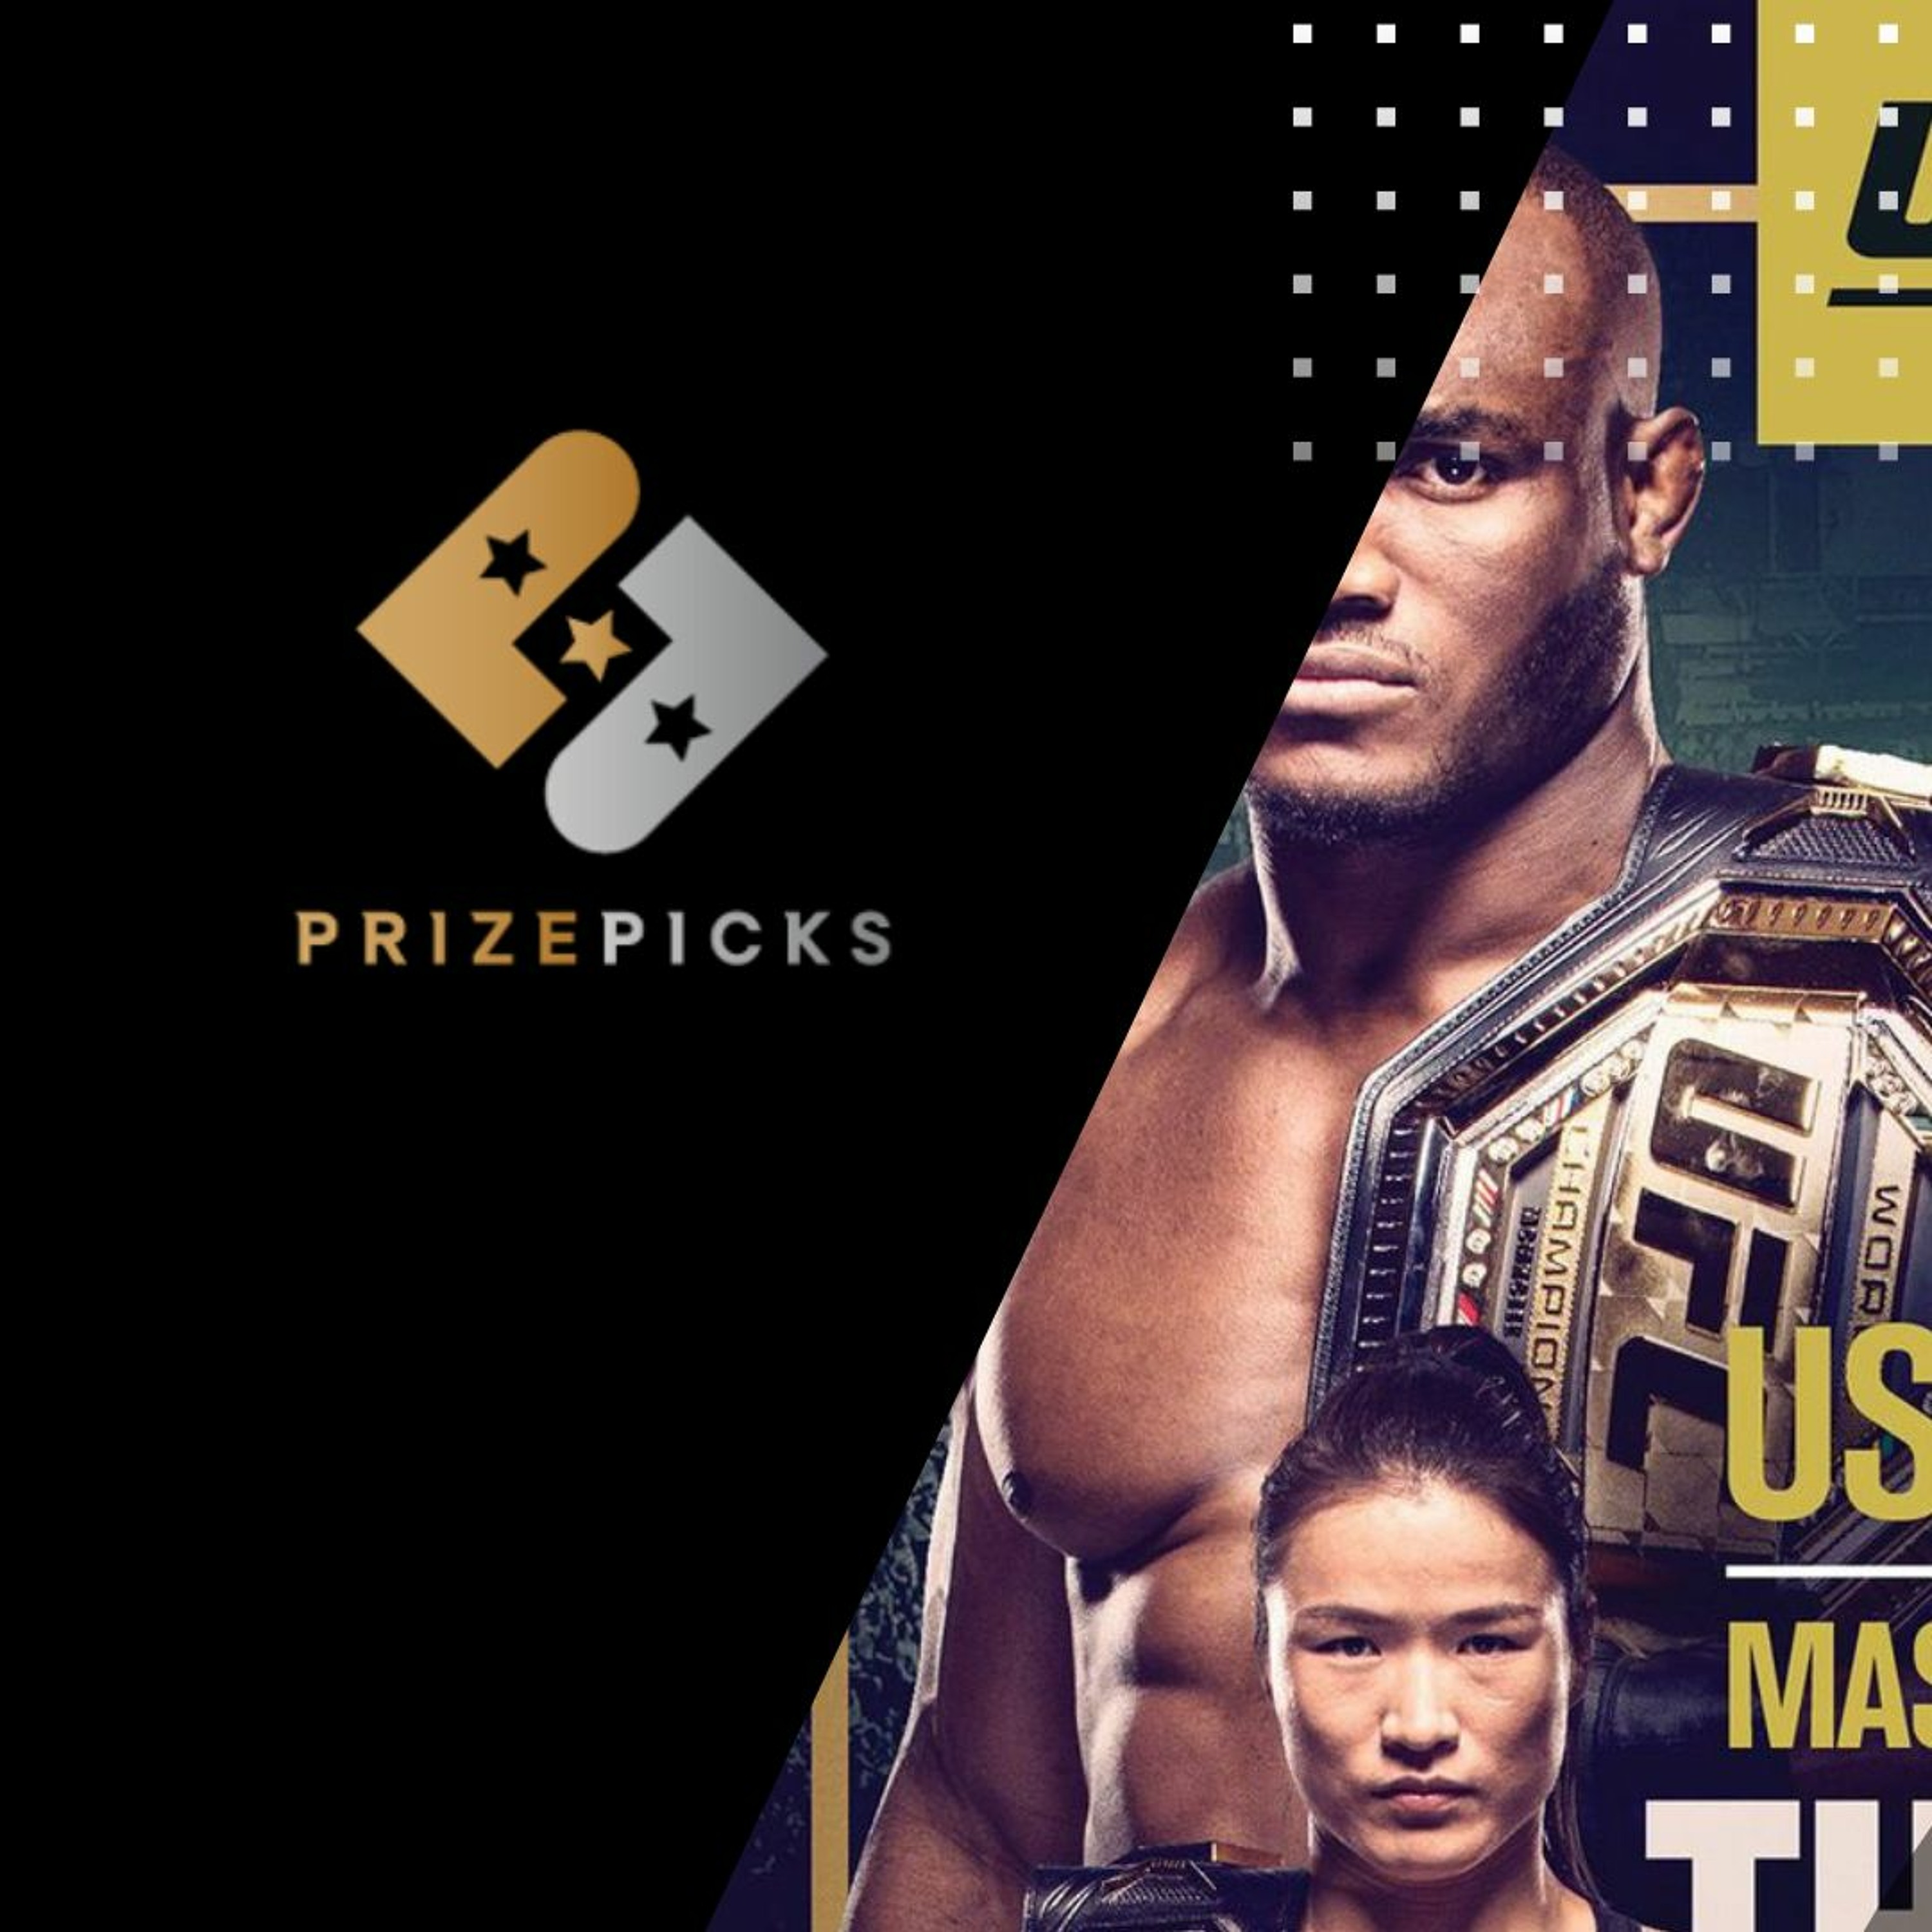 UFC 261 Prize Picks Tips | Usman vs Masvidal 2 | Zhang vs Namajunas | Betting Tips